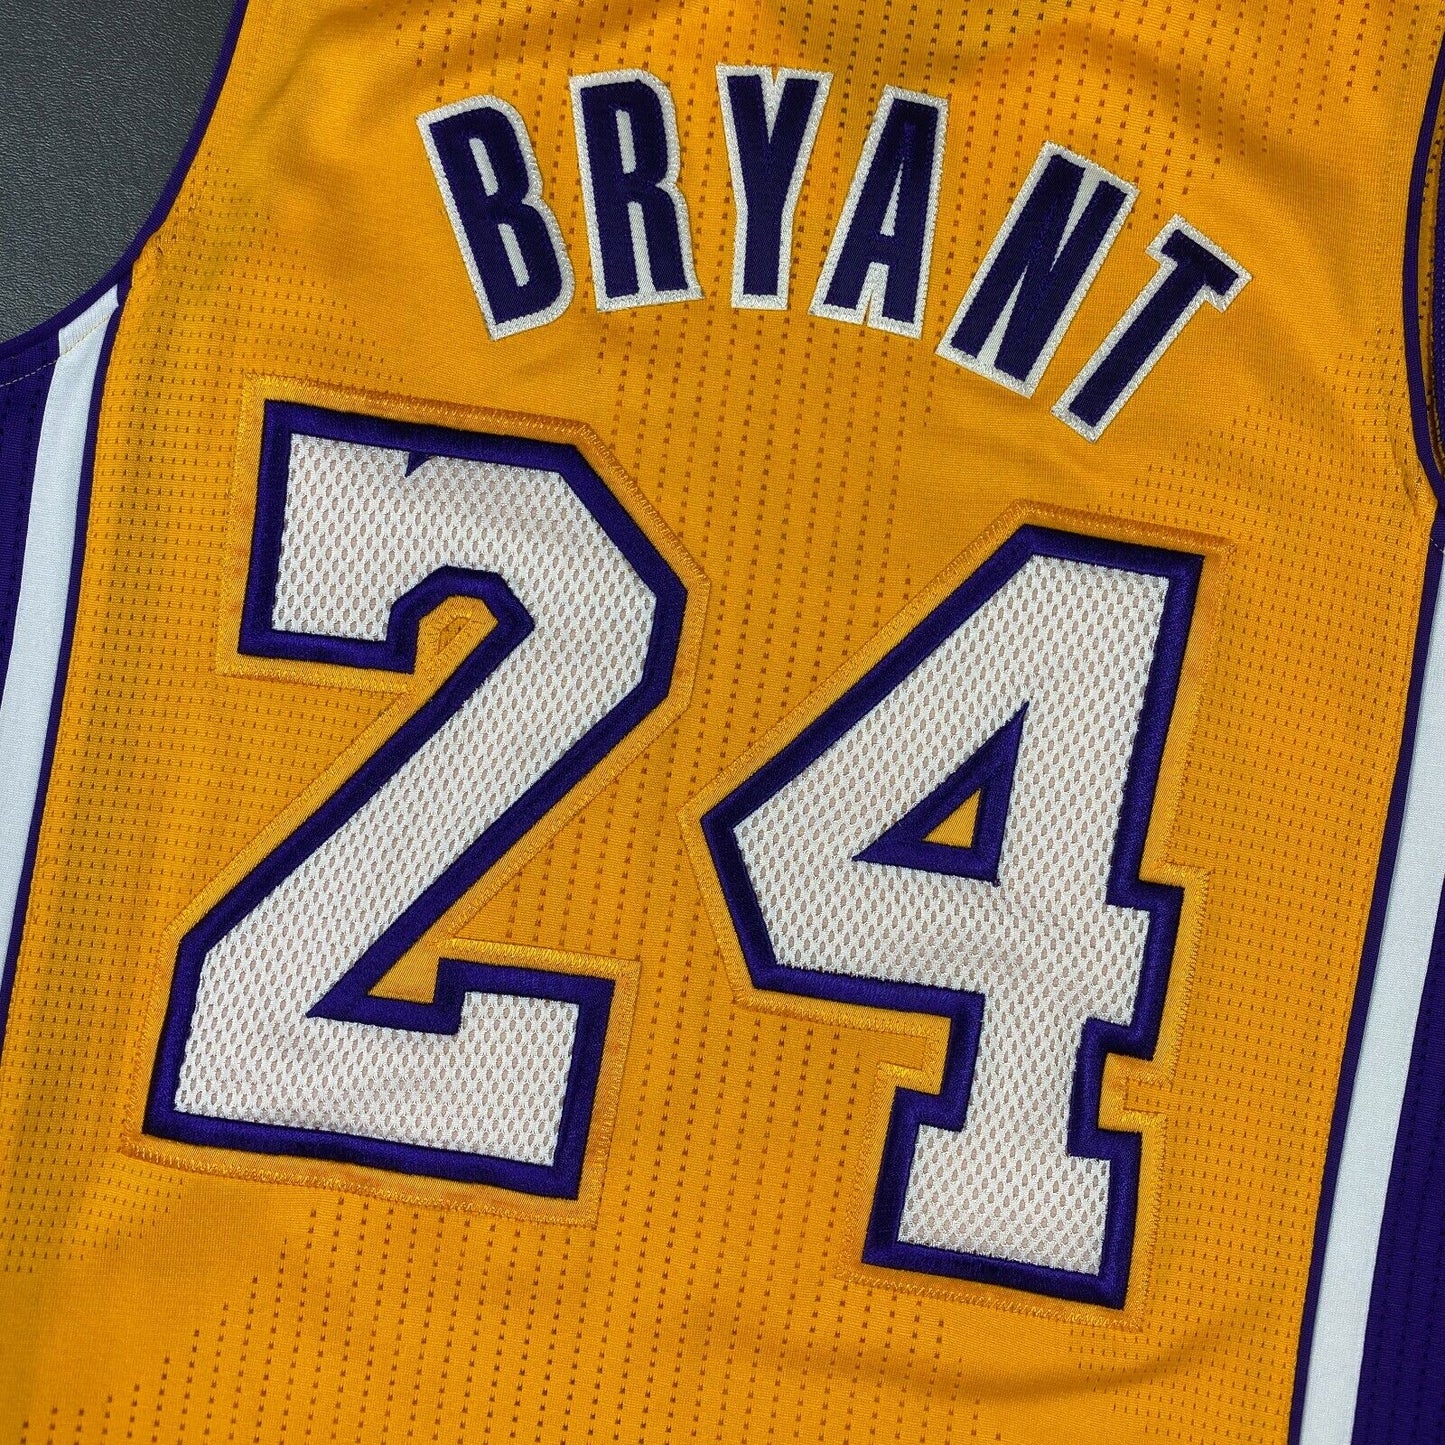 100% Authentic Kobe Bryant 2010 2011 Lakers Jersey Size M 40 Mens Pro Cut Mesh #